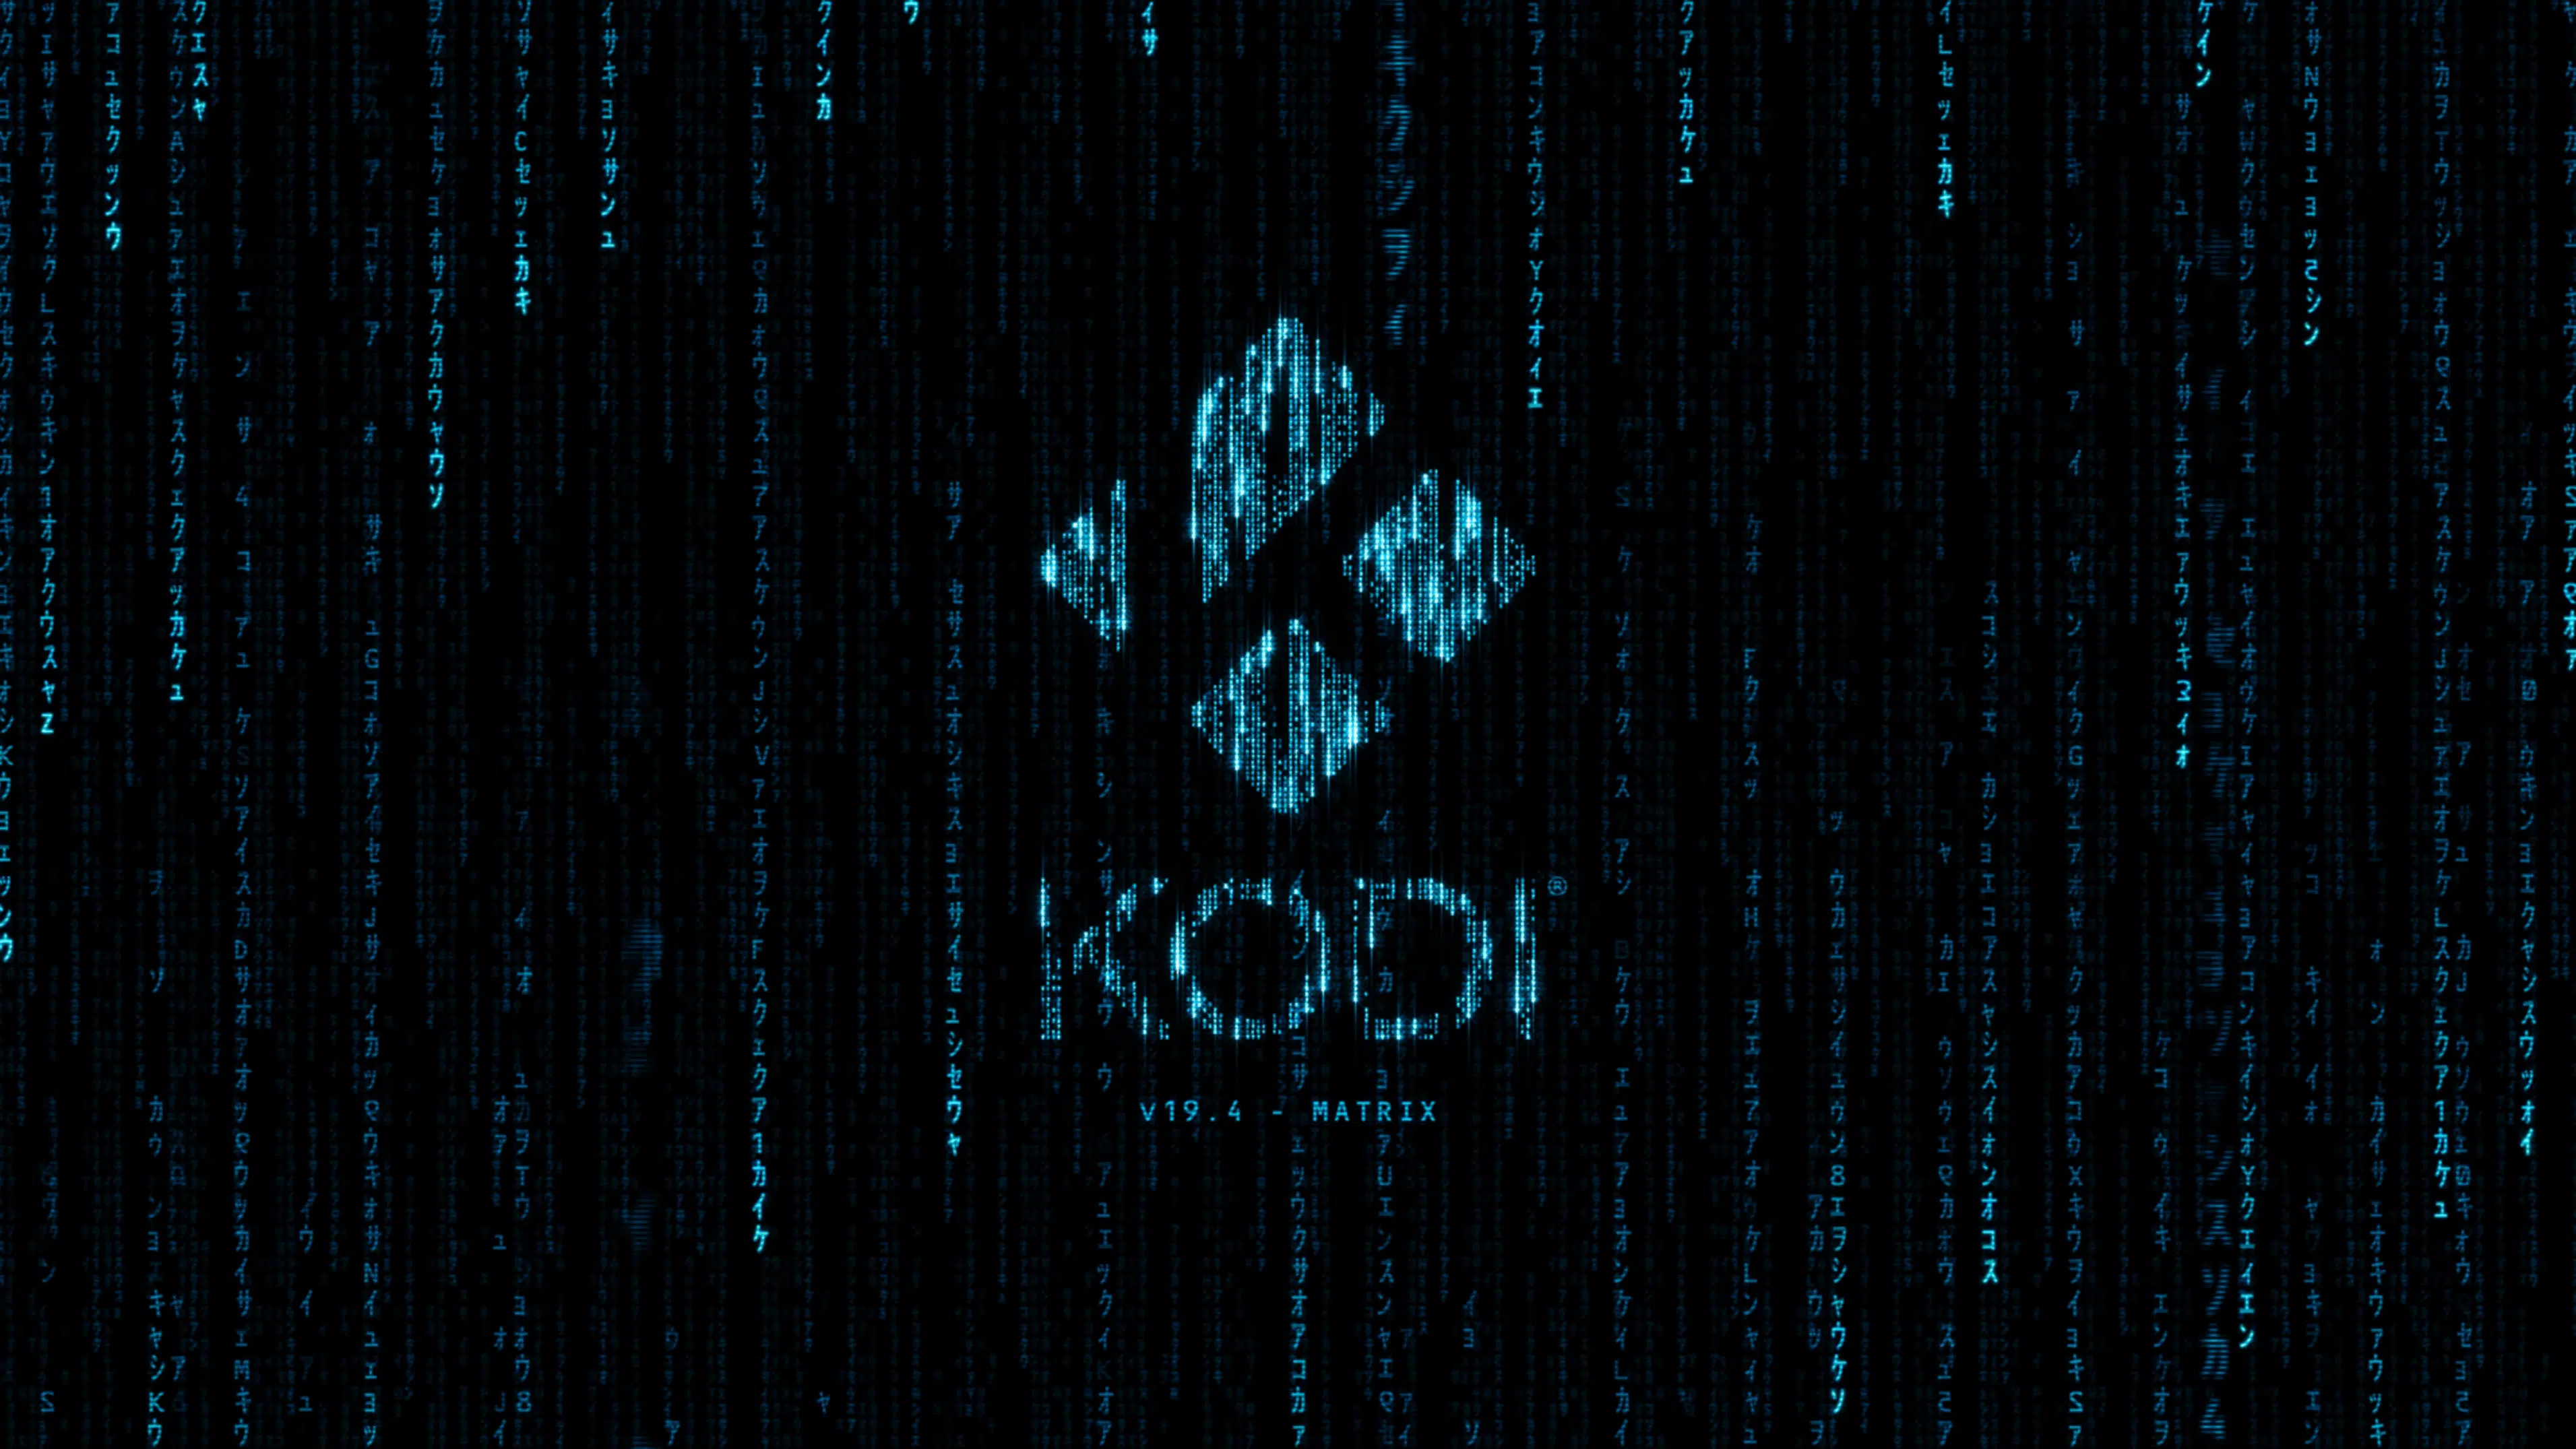 How to download and install Kodi 19.4 or Kodi 20 (Nexus)